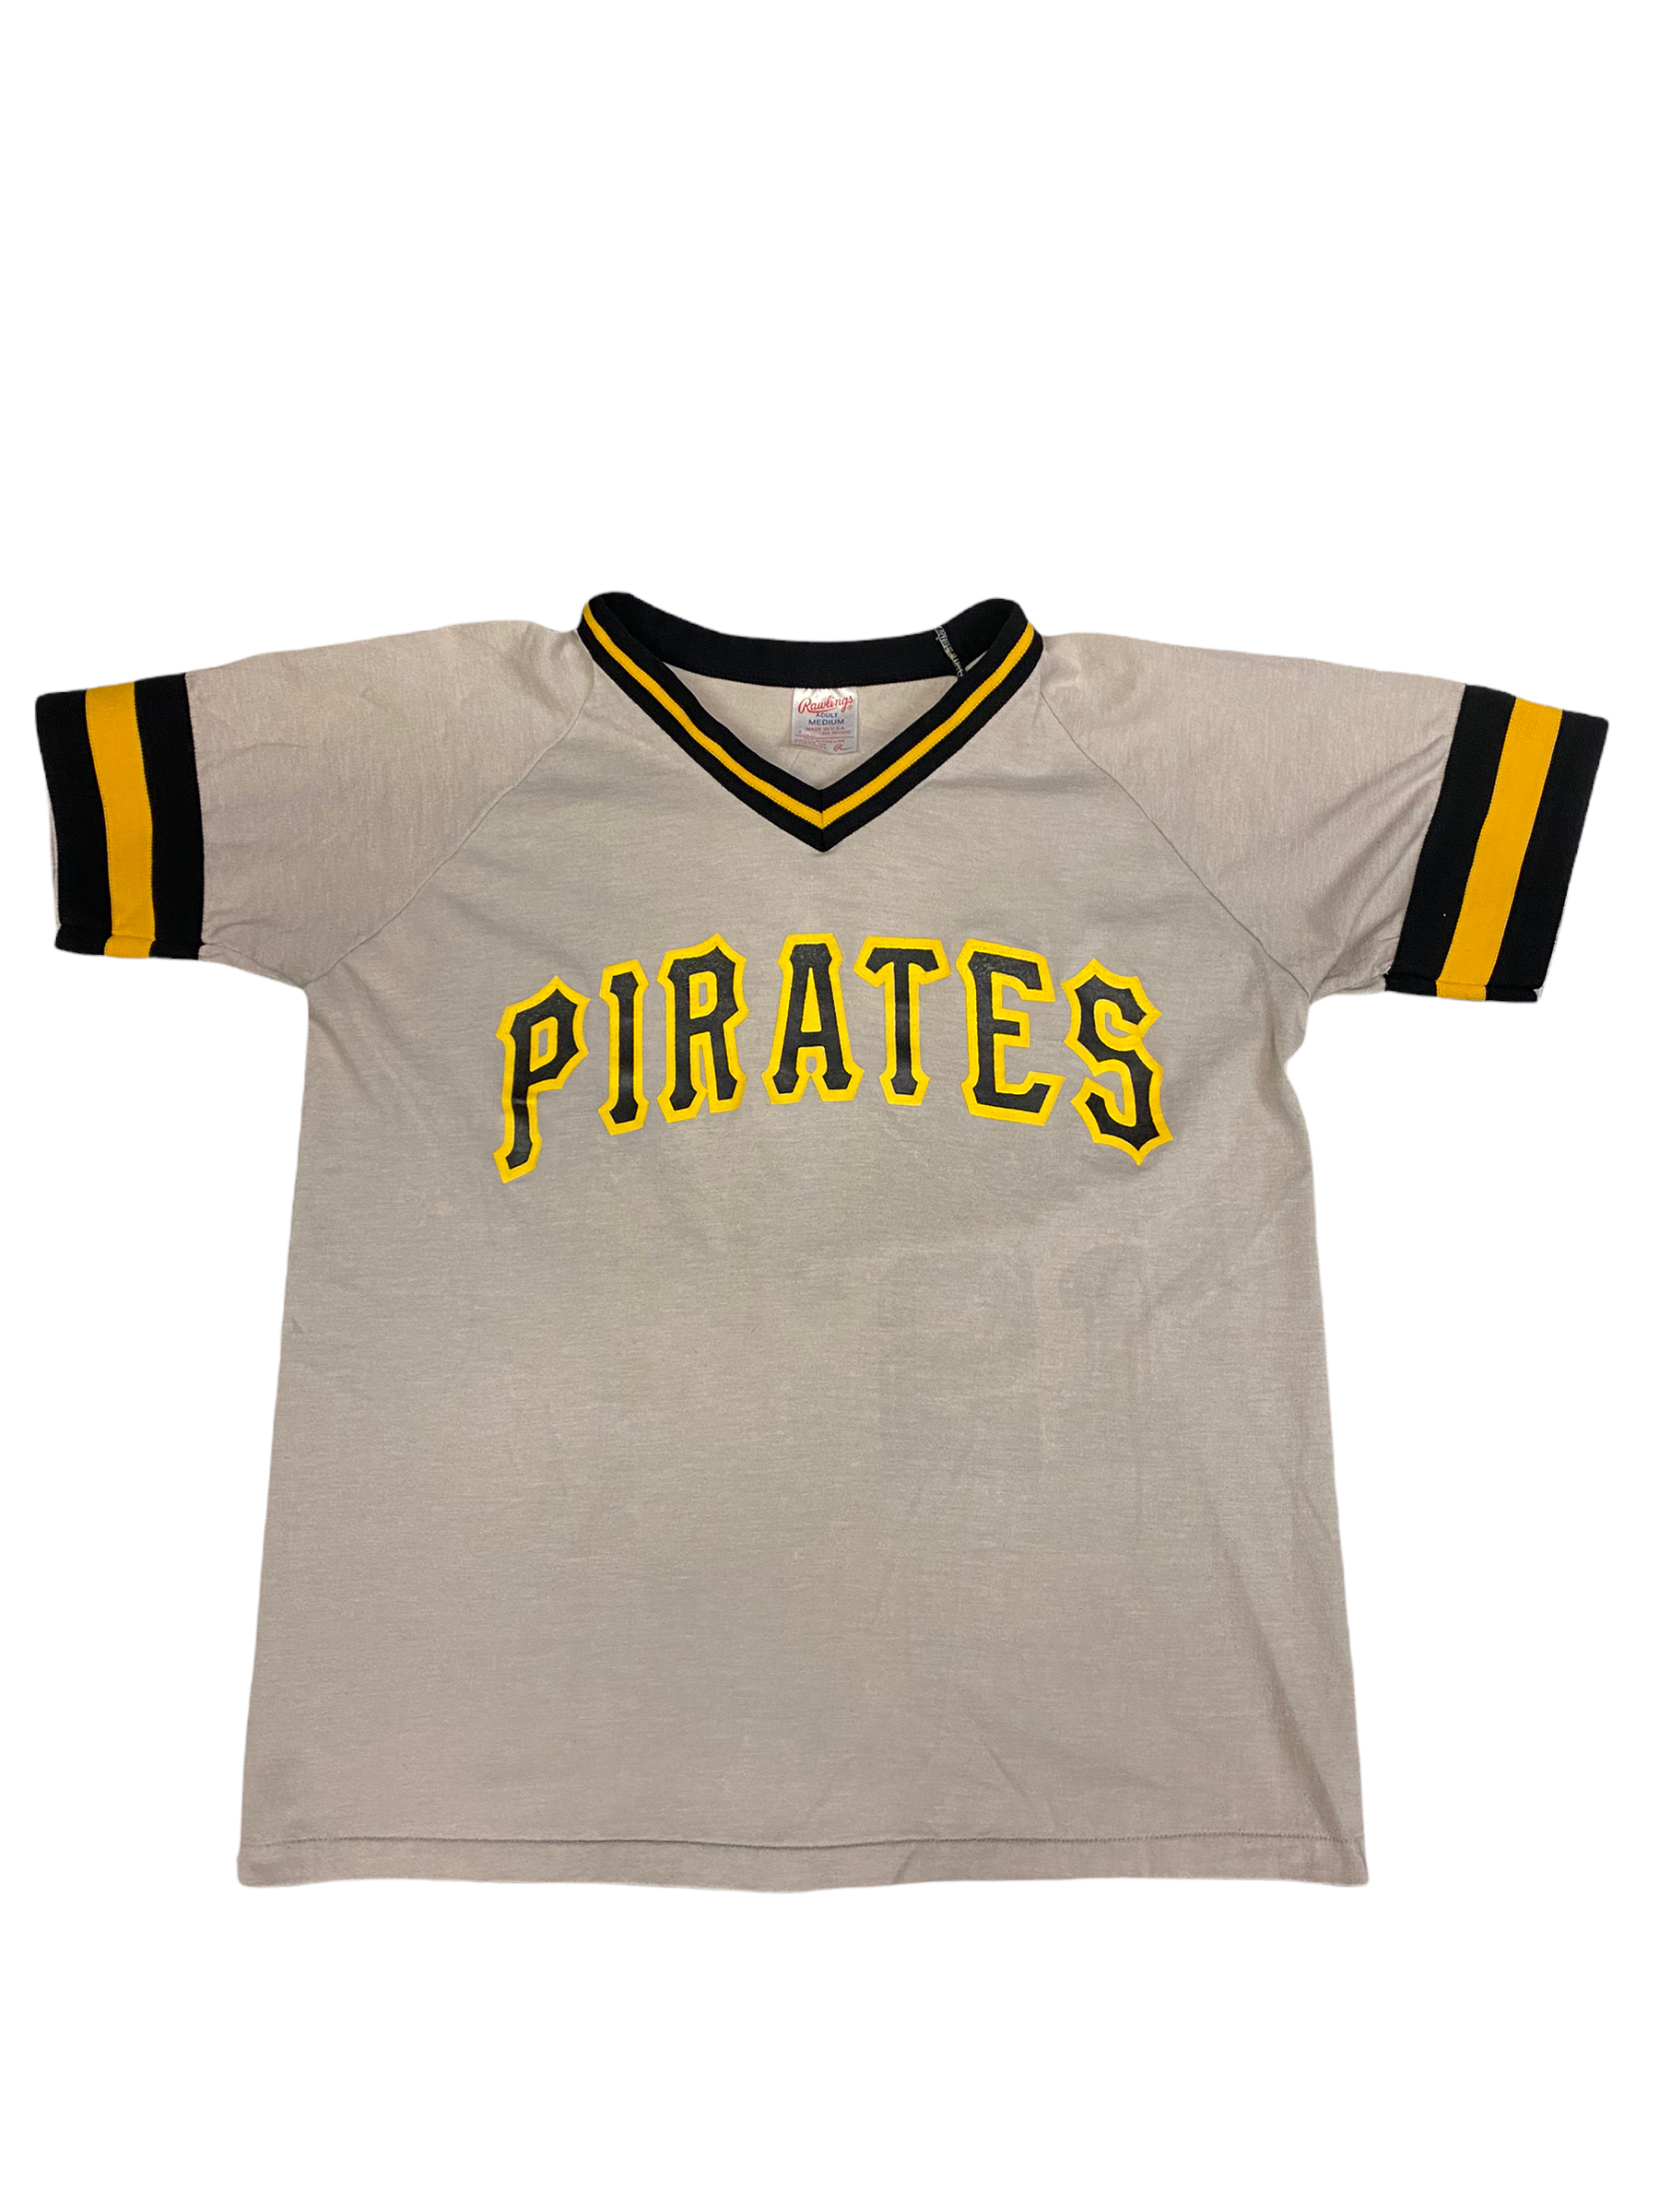 black and yellow pirates jersey